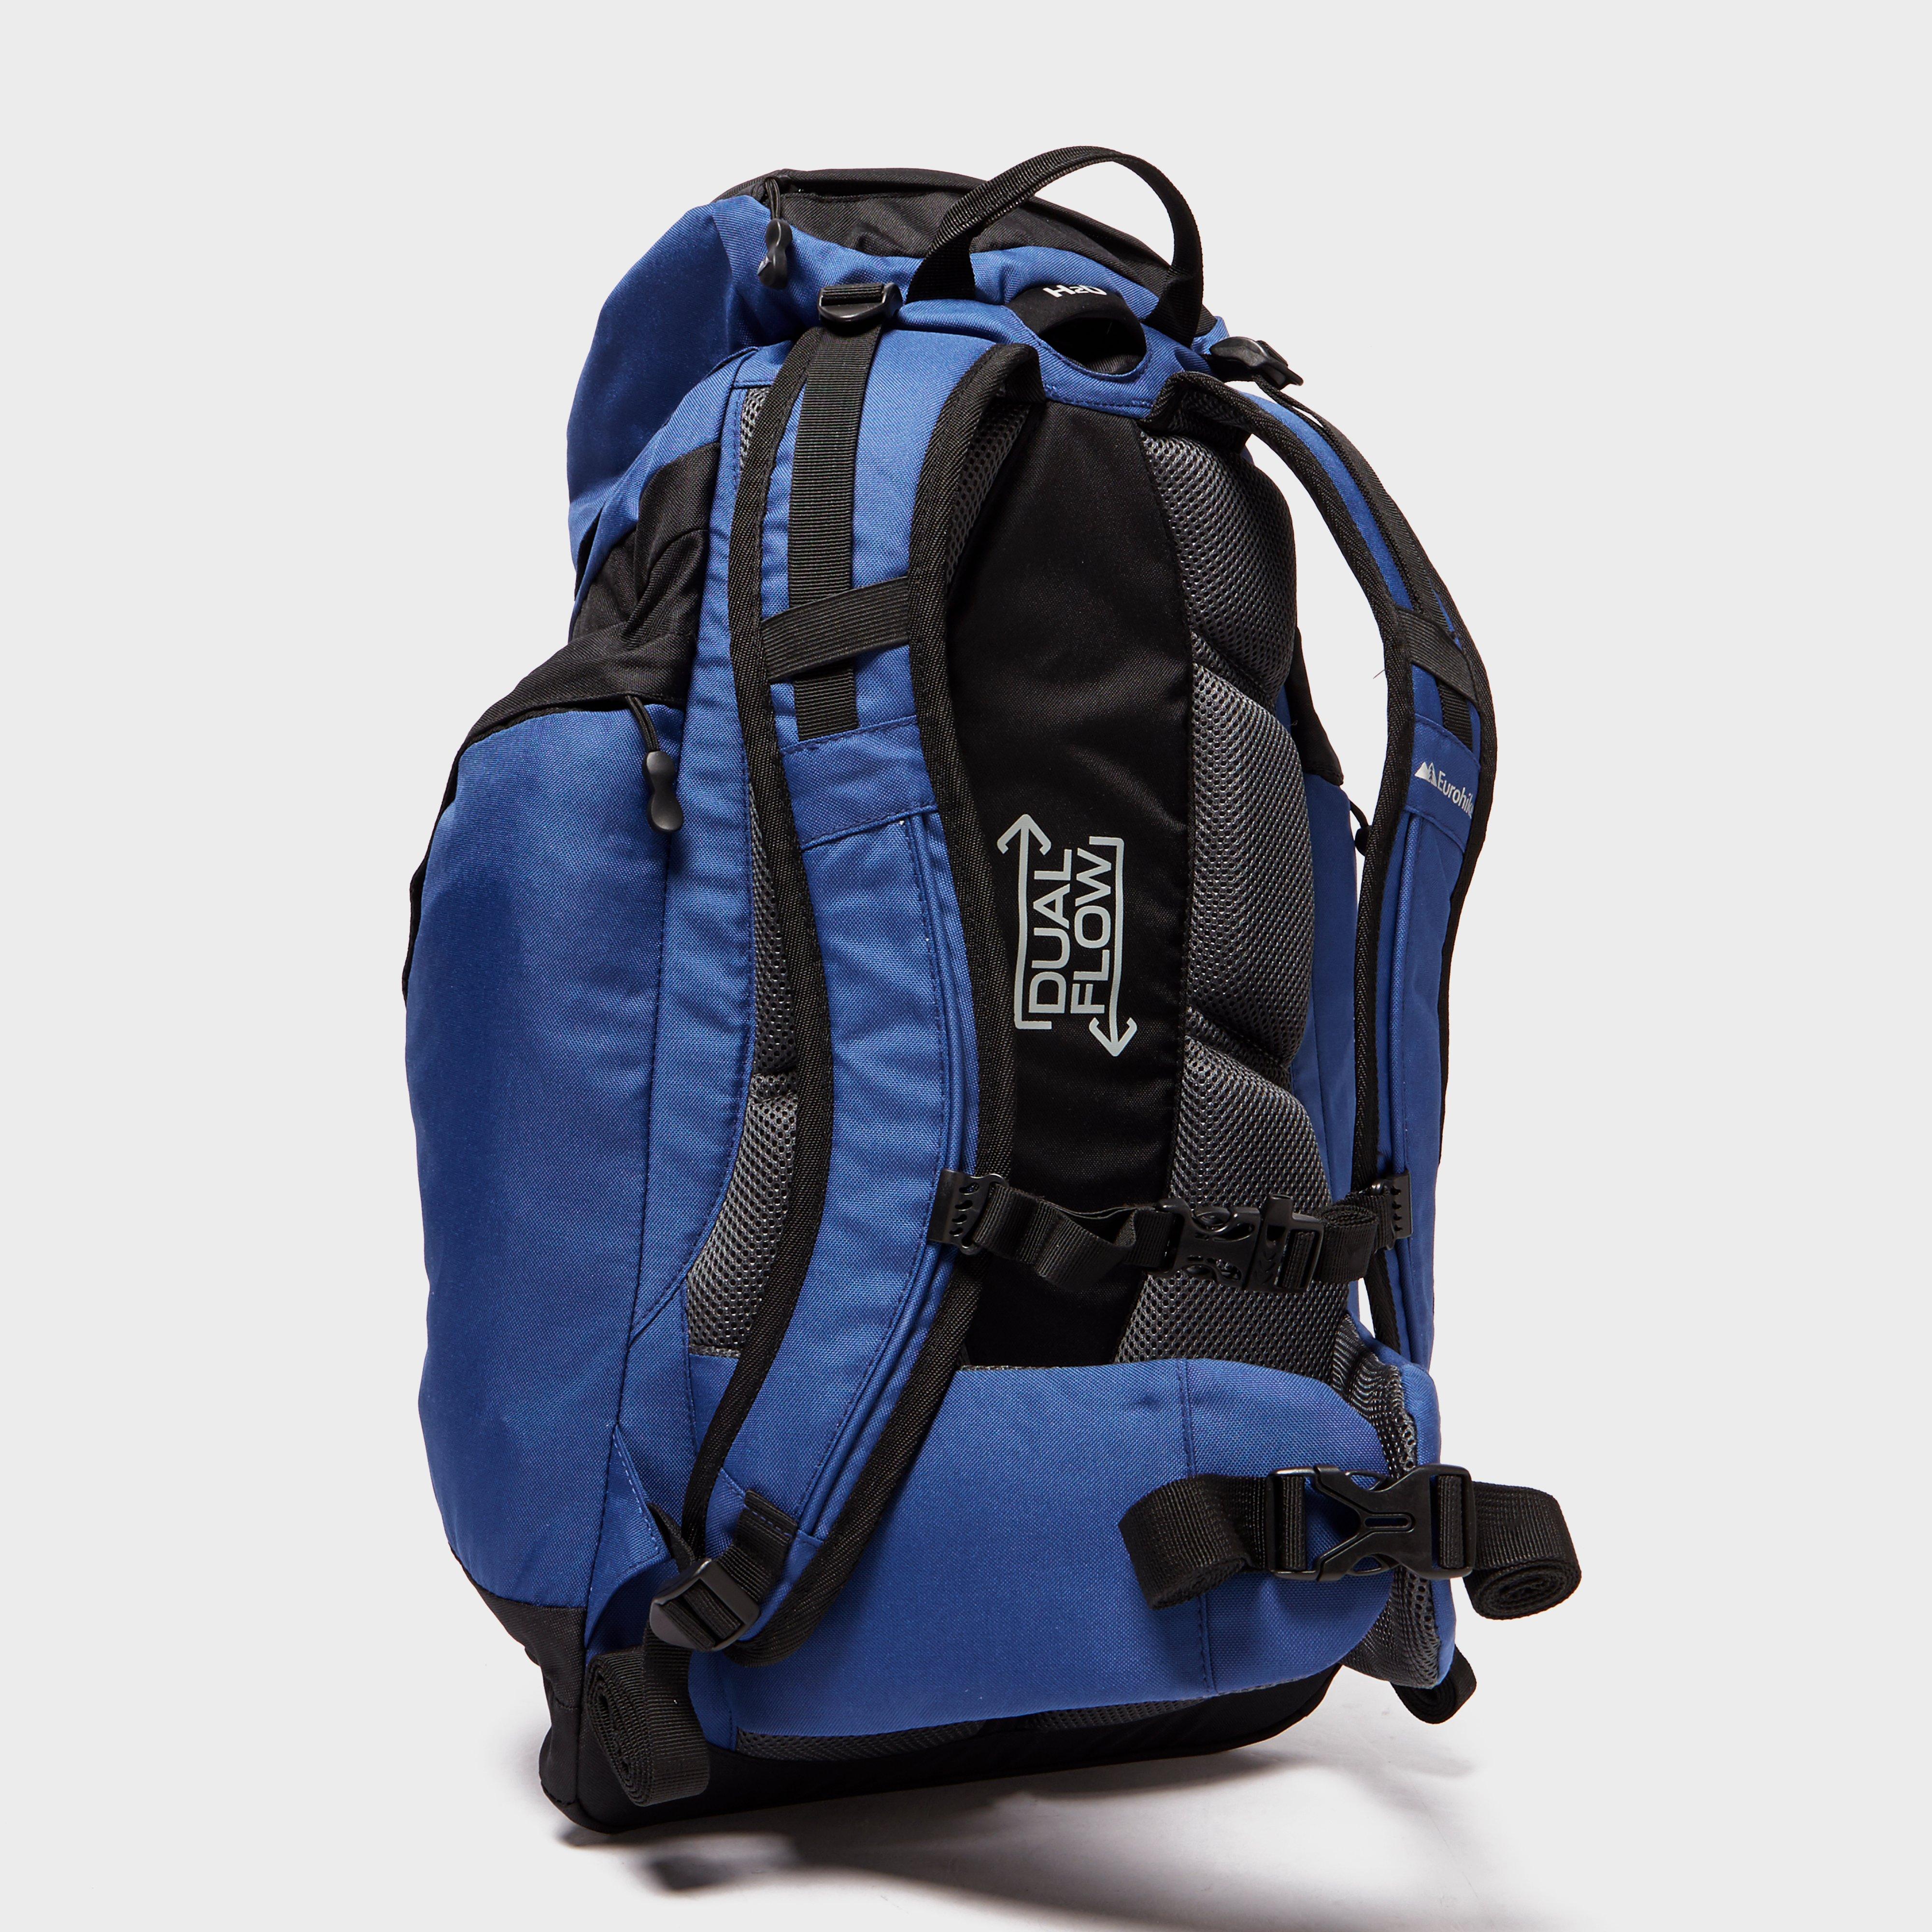 Eurohike Pathfinder II 35L Backpack Review